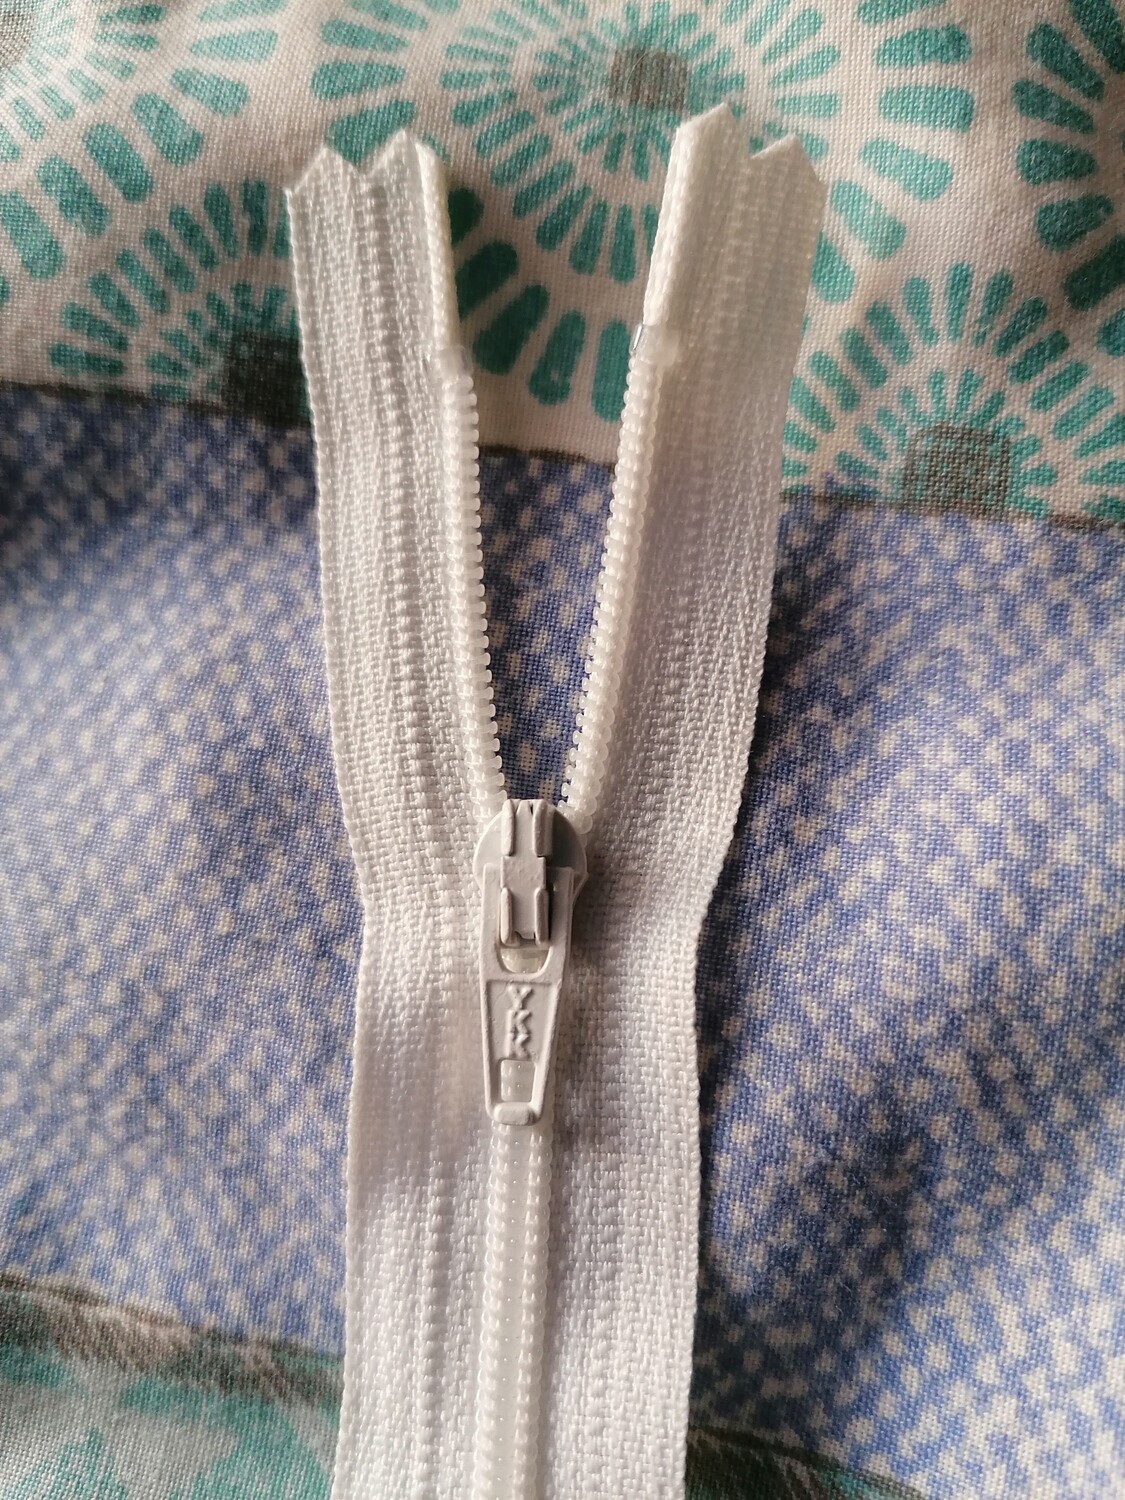 51cm (20") nylon closed end zip